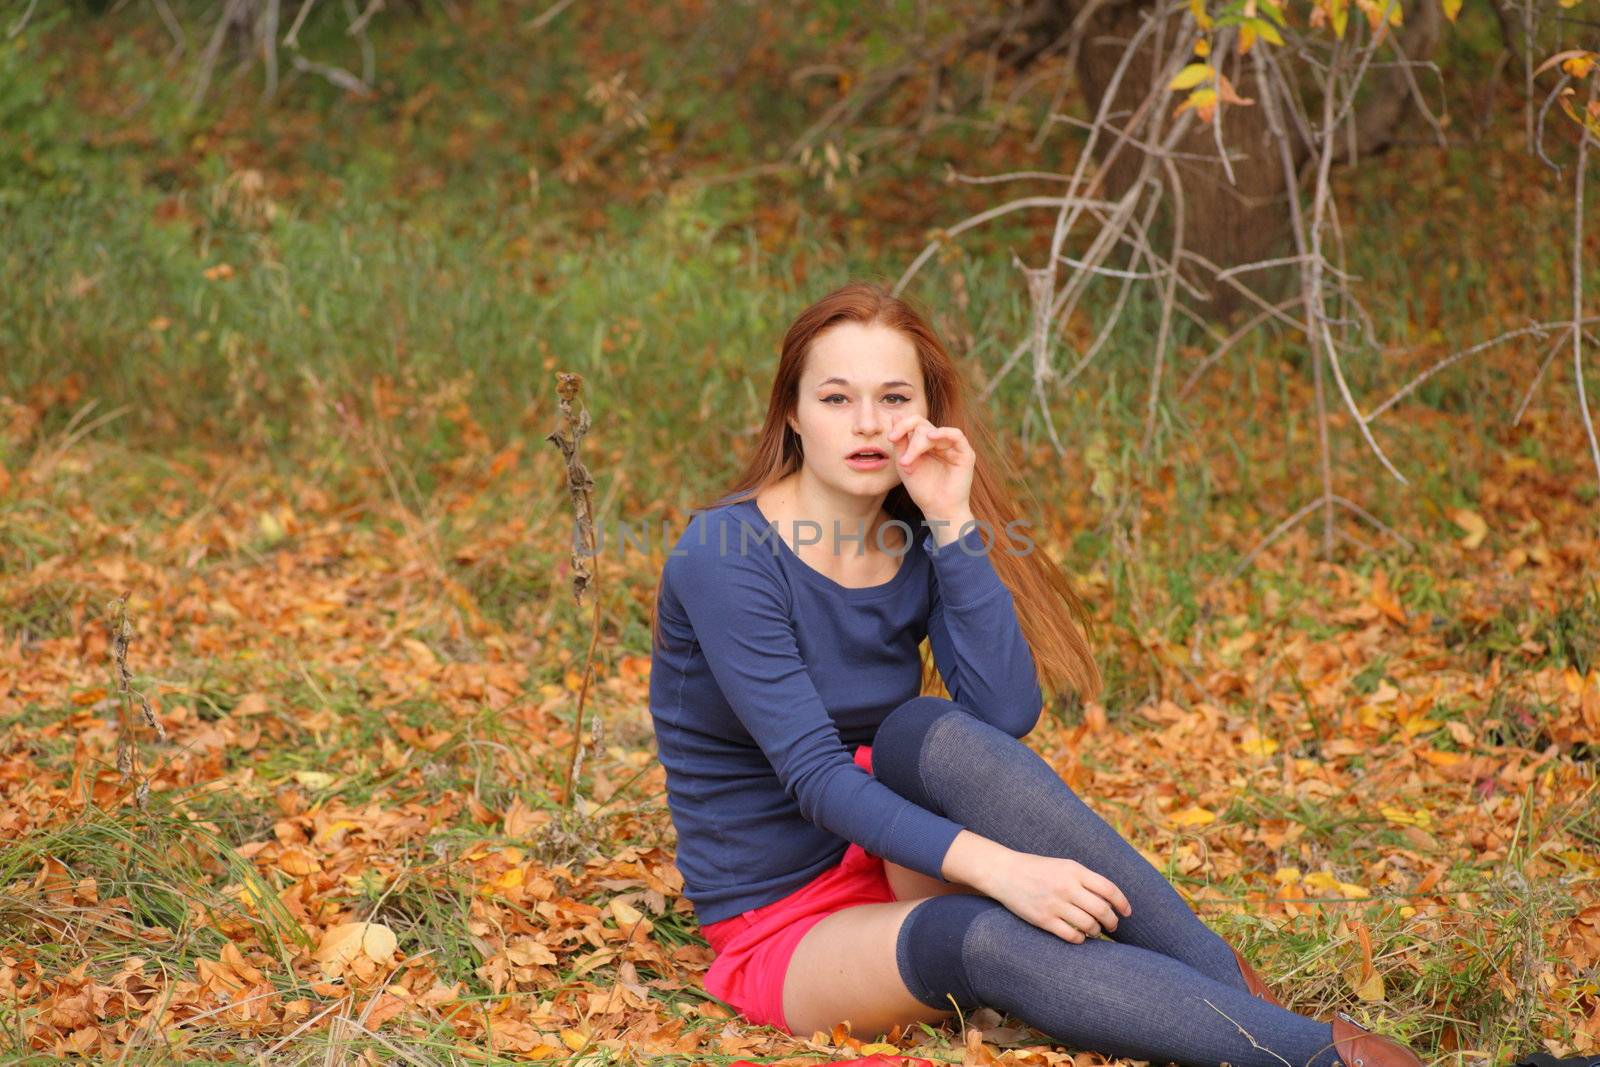 romantic girl sitting in autumn leaves by mettus